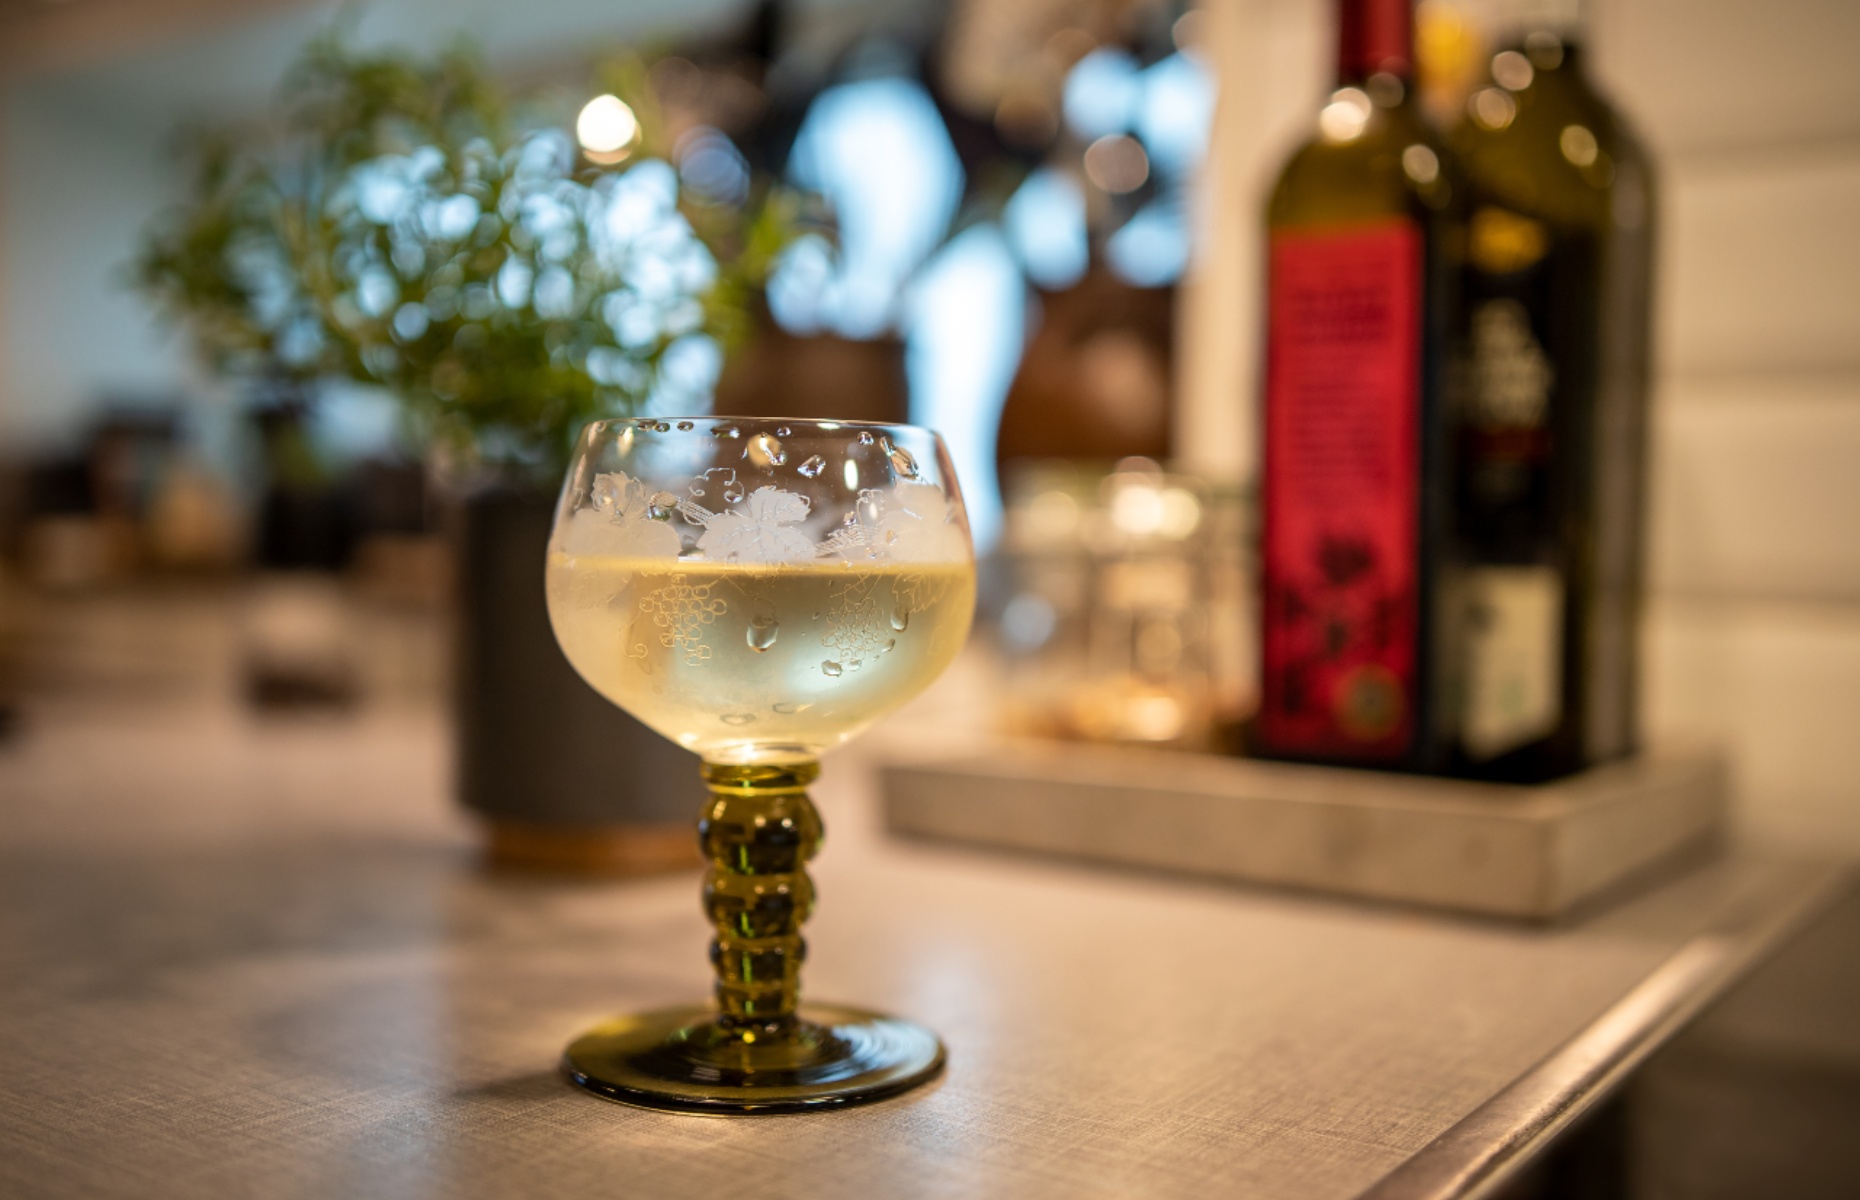 Gruner Veltliner in classic Austrian wine glass (Image: VLA photos/Shutterstock)